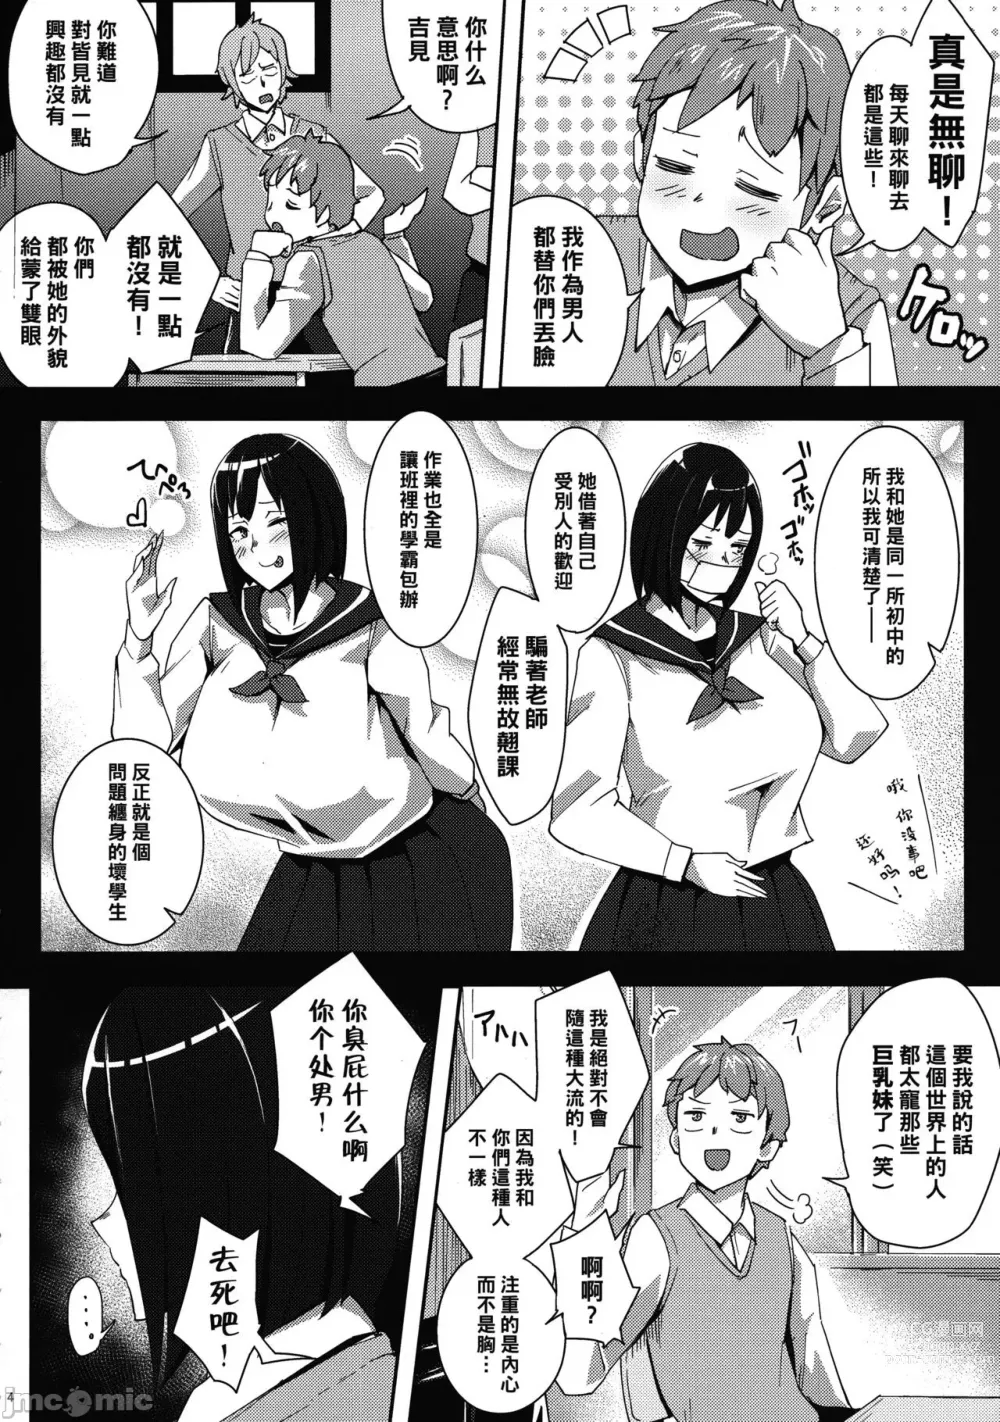 Page 3 of manga Minami-san Sensational